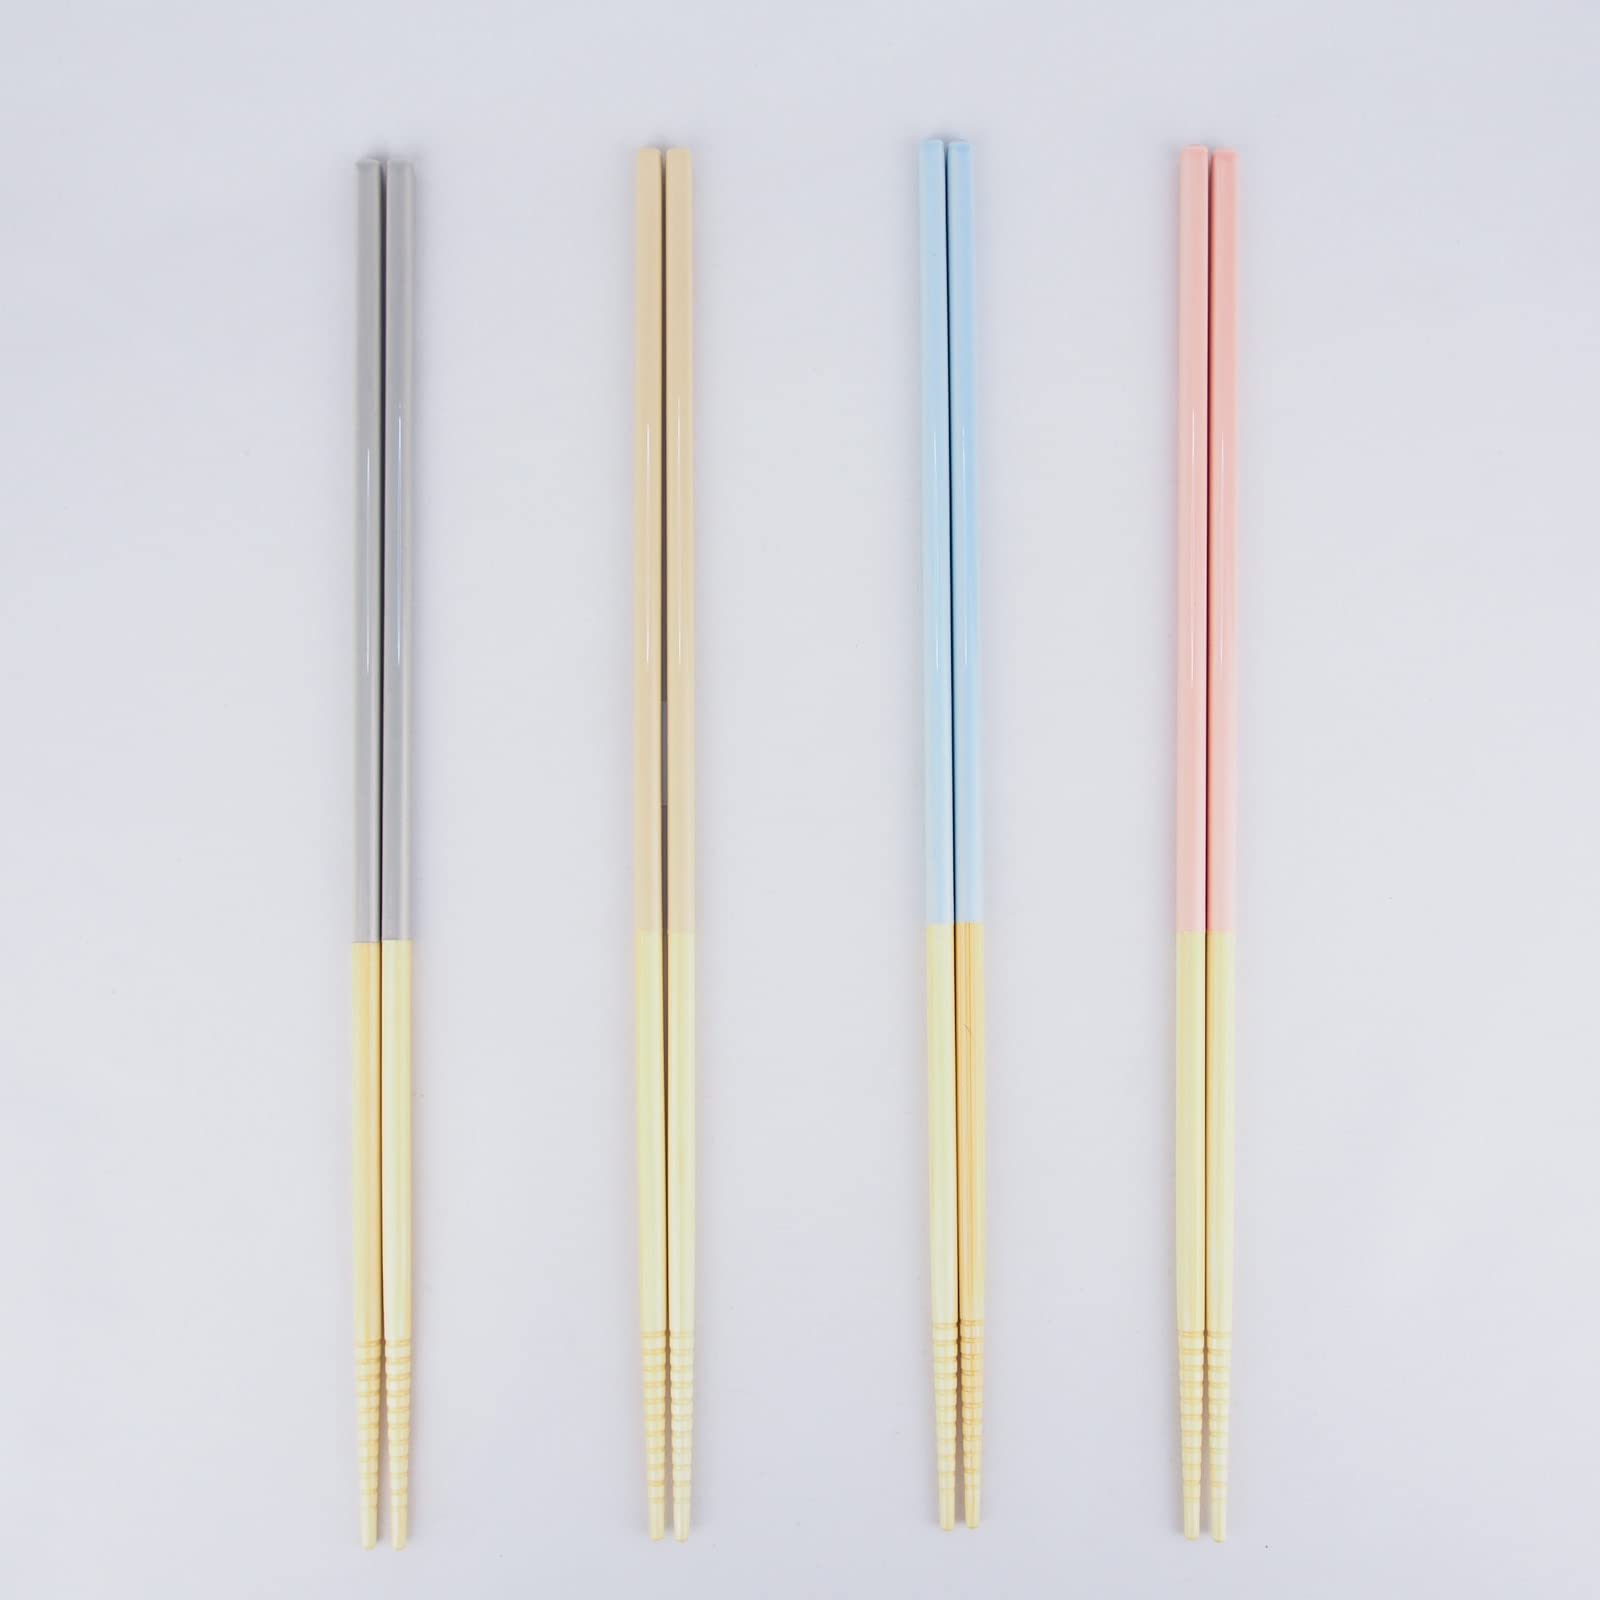 Ogishi Tadashi Shouten Cooking Chopsticks Long Bamboo Wood Saibashi 13 Inches Made in Japan (Beige)